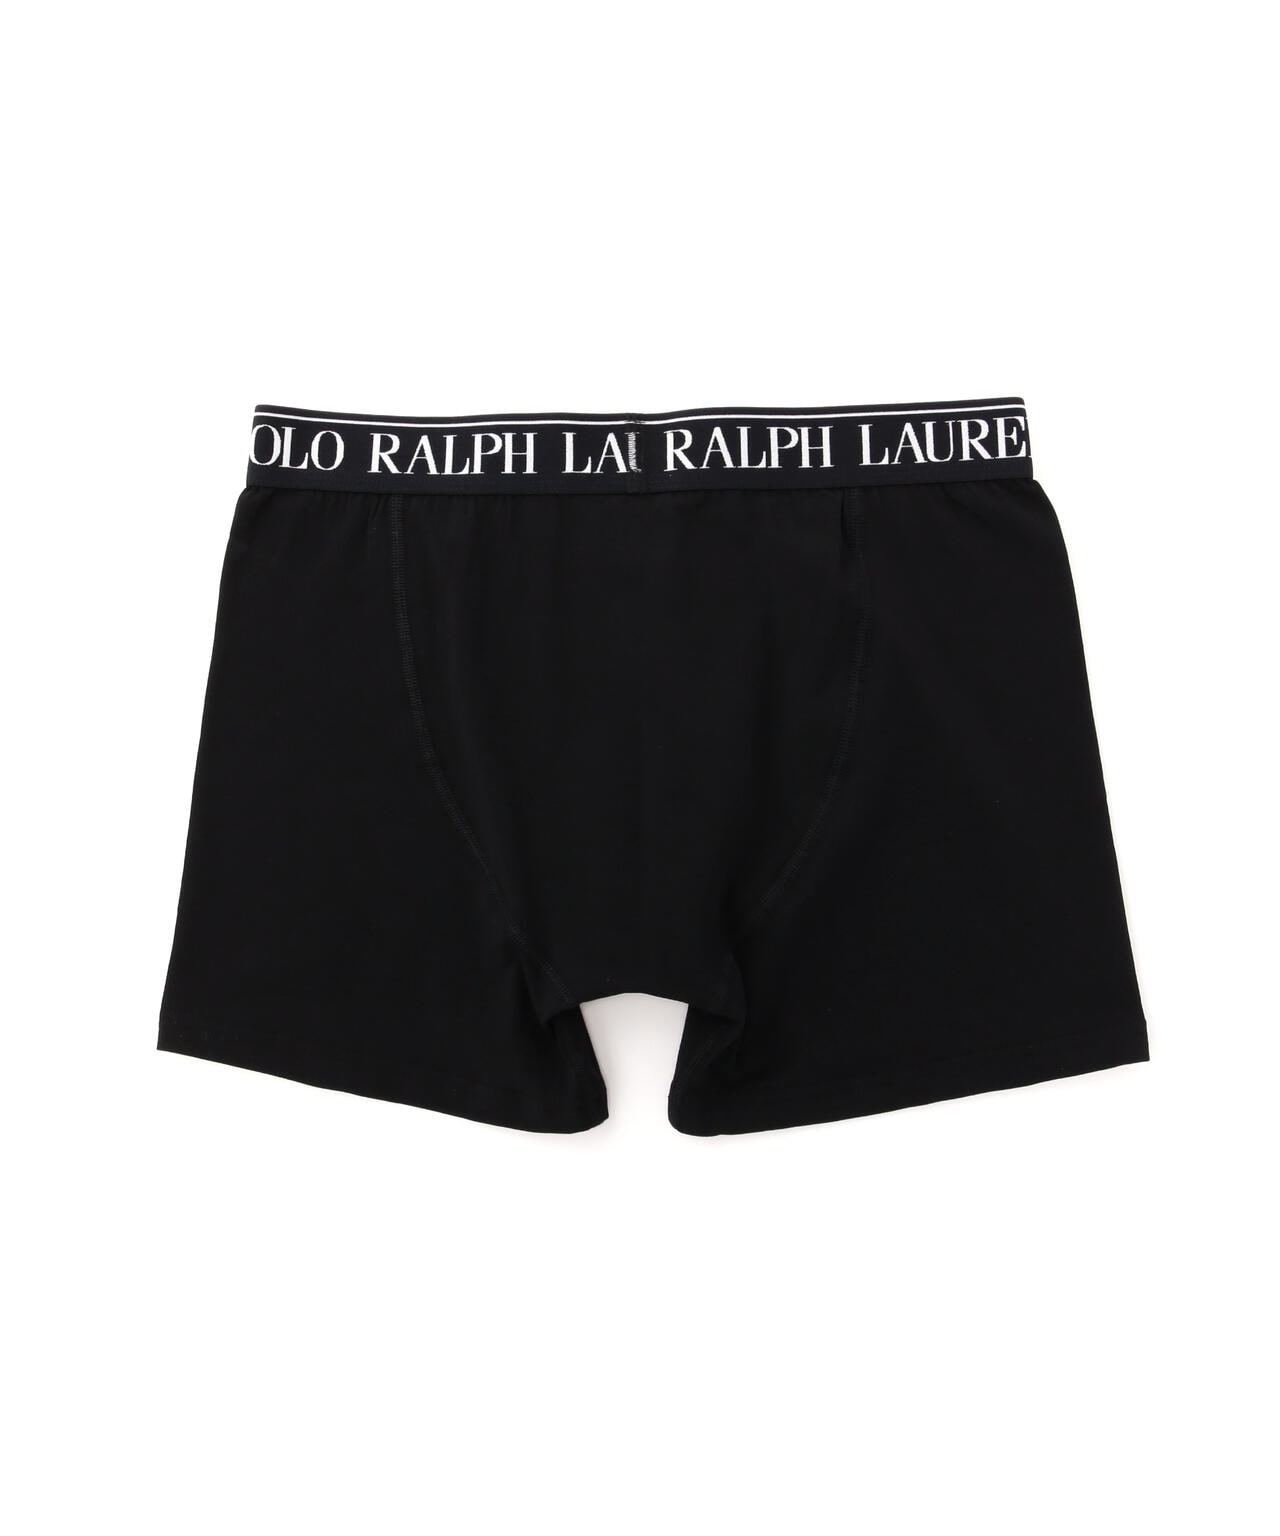 POLO RALPH LAUREN/ポロラルフローレン/Bear Embroidery Boxer Brief/ボクサーブリーフ